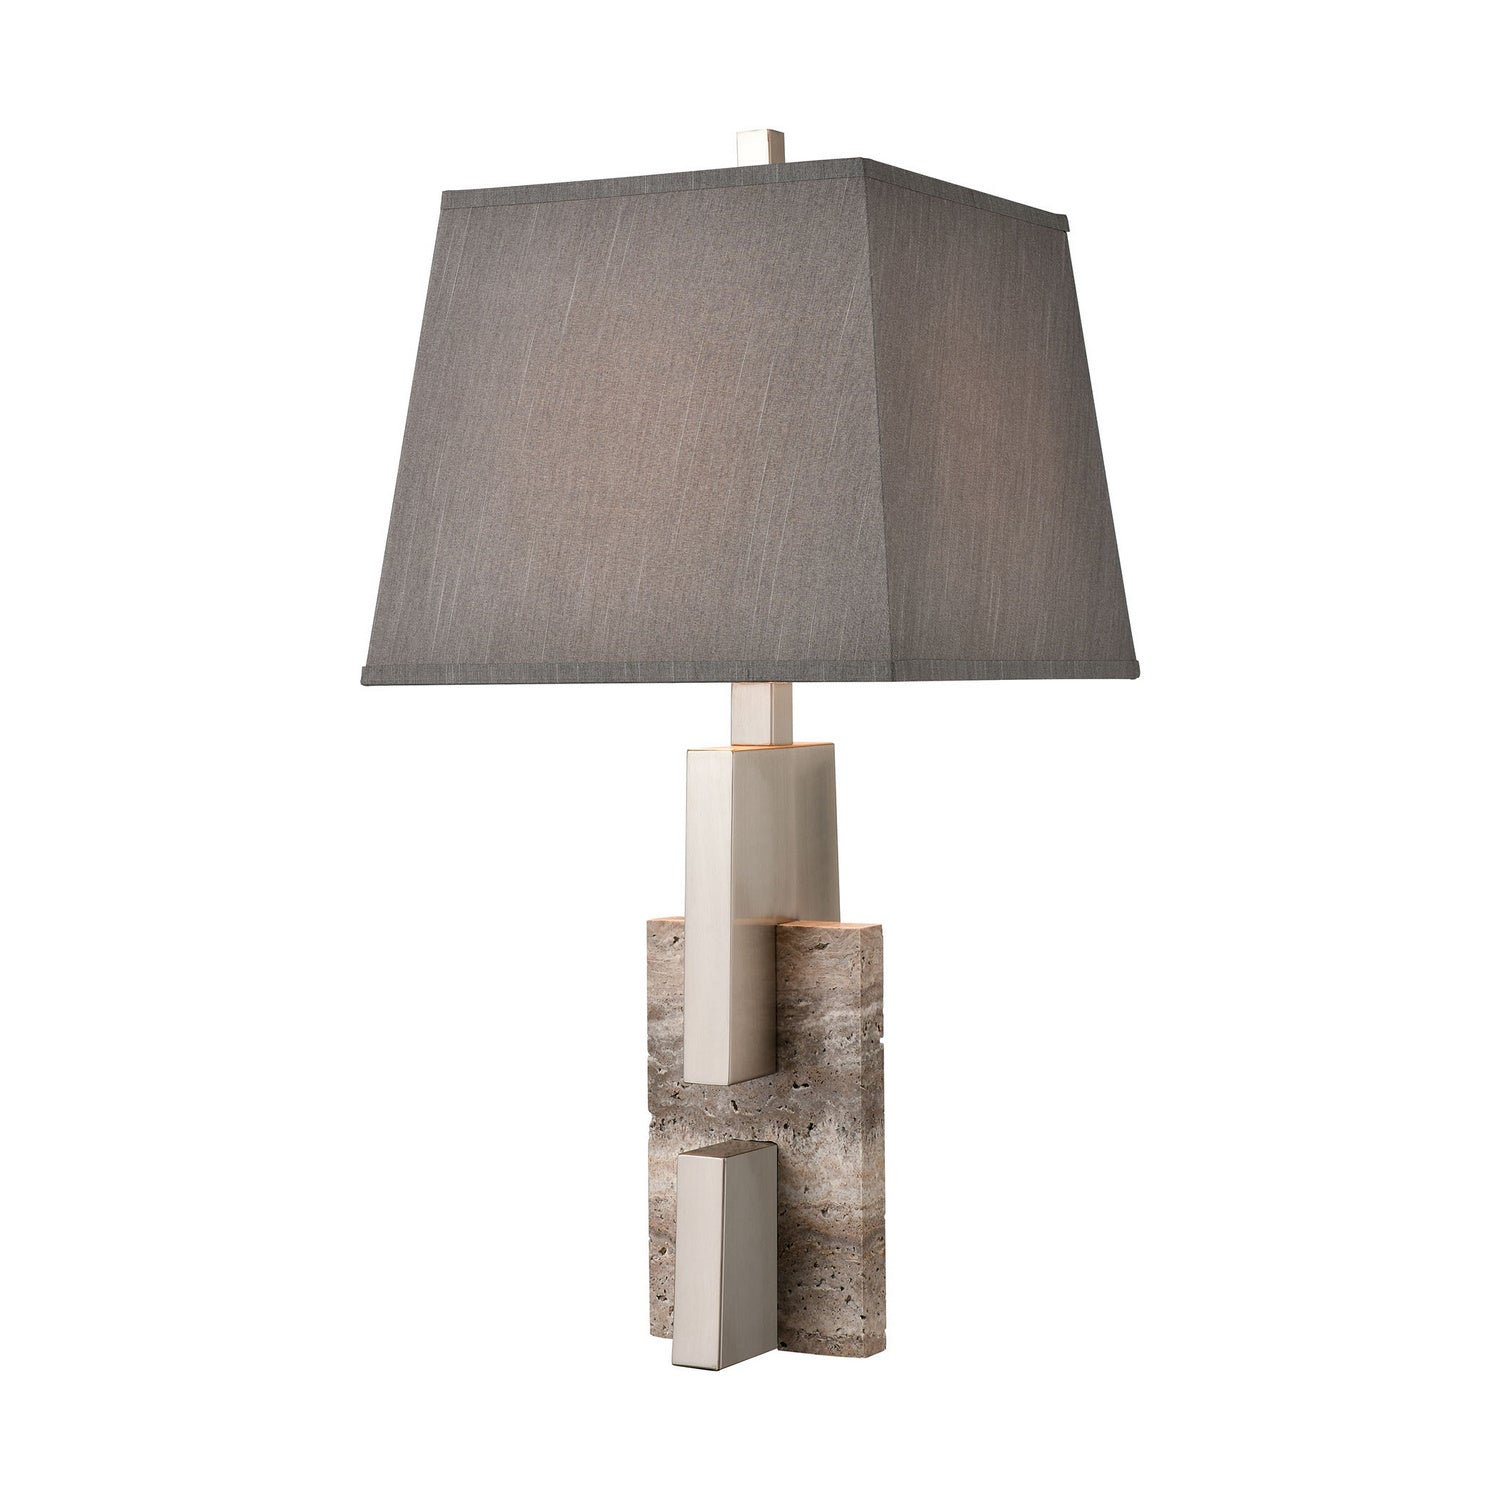 ELK Home - D4668 - One Light Table Lamp - Rochester - Gray